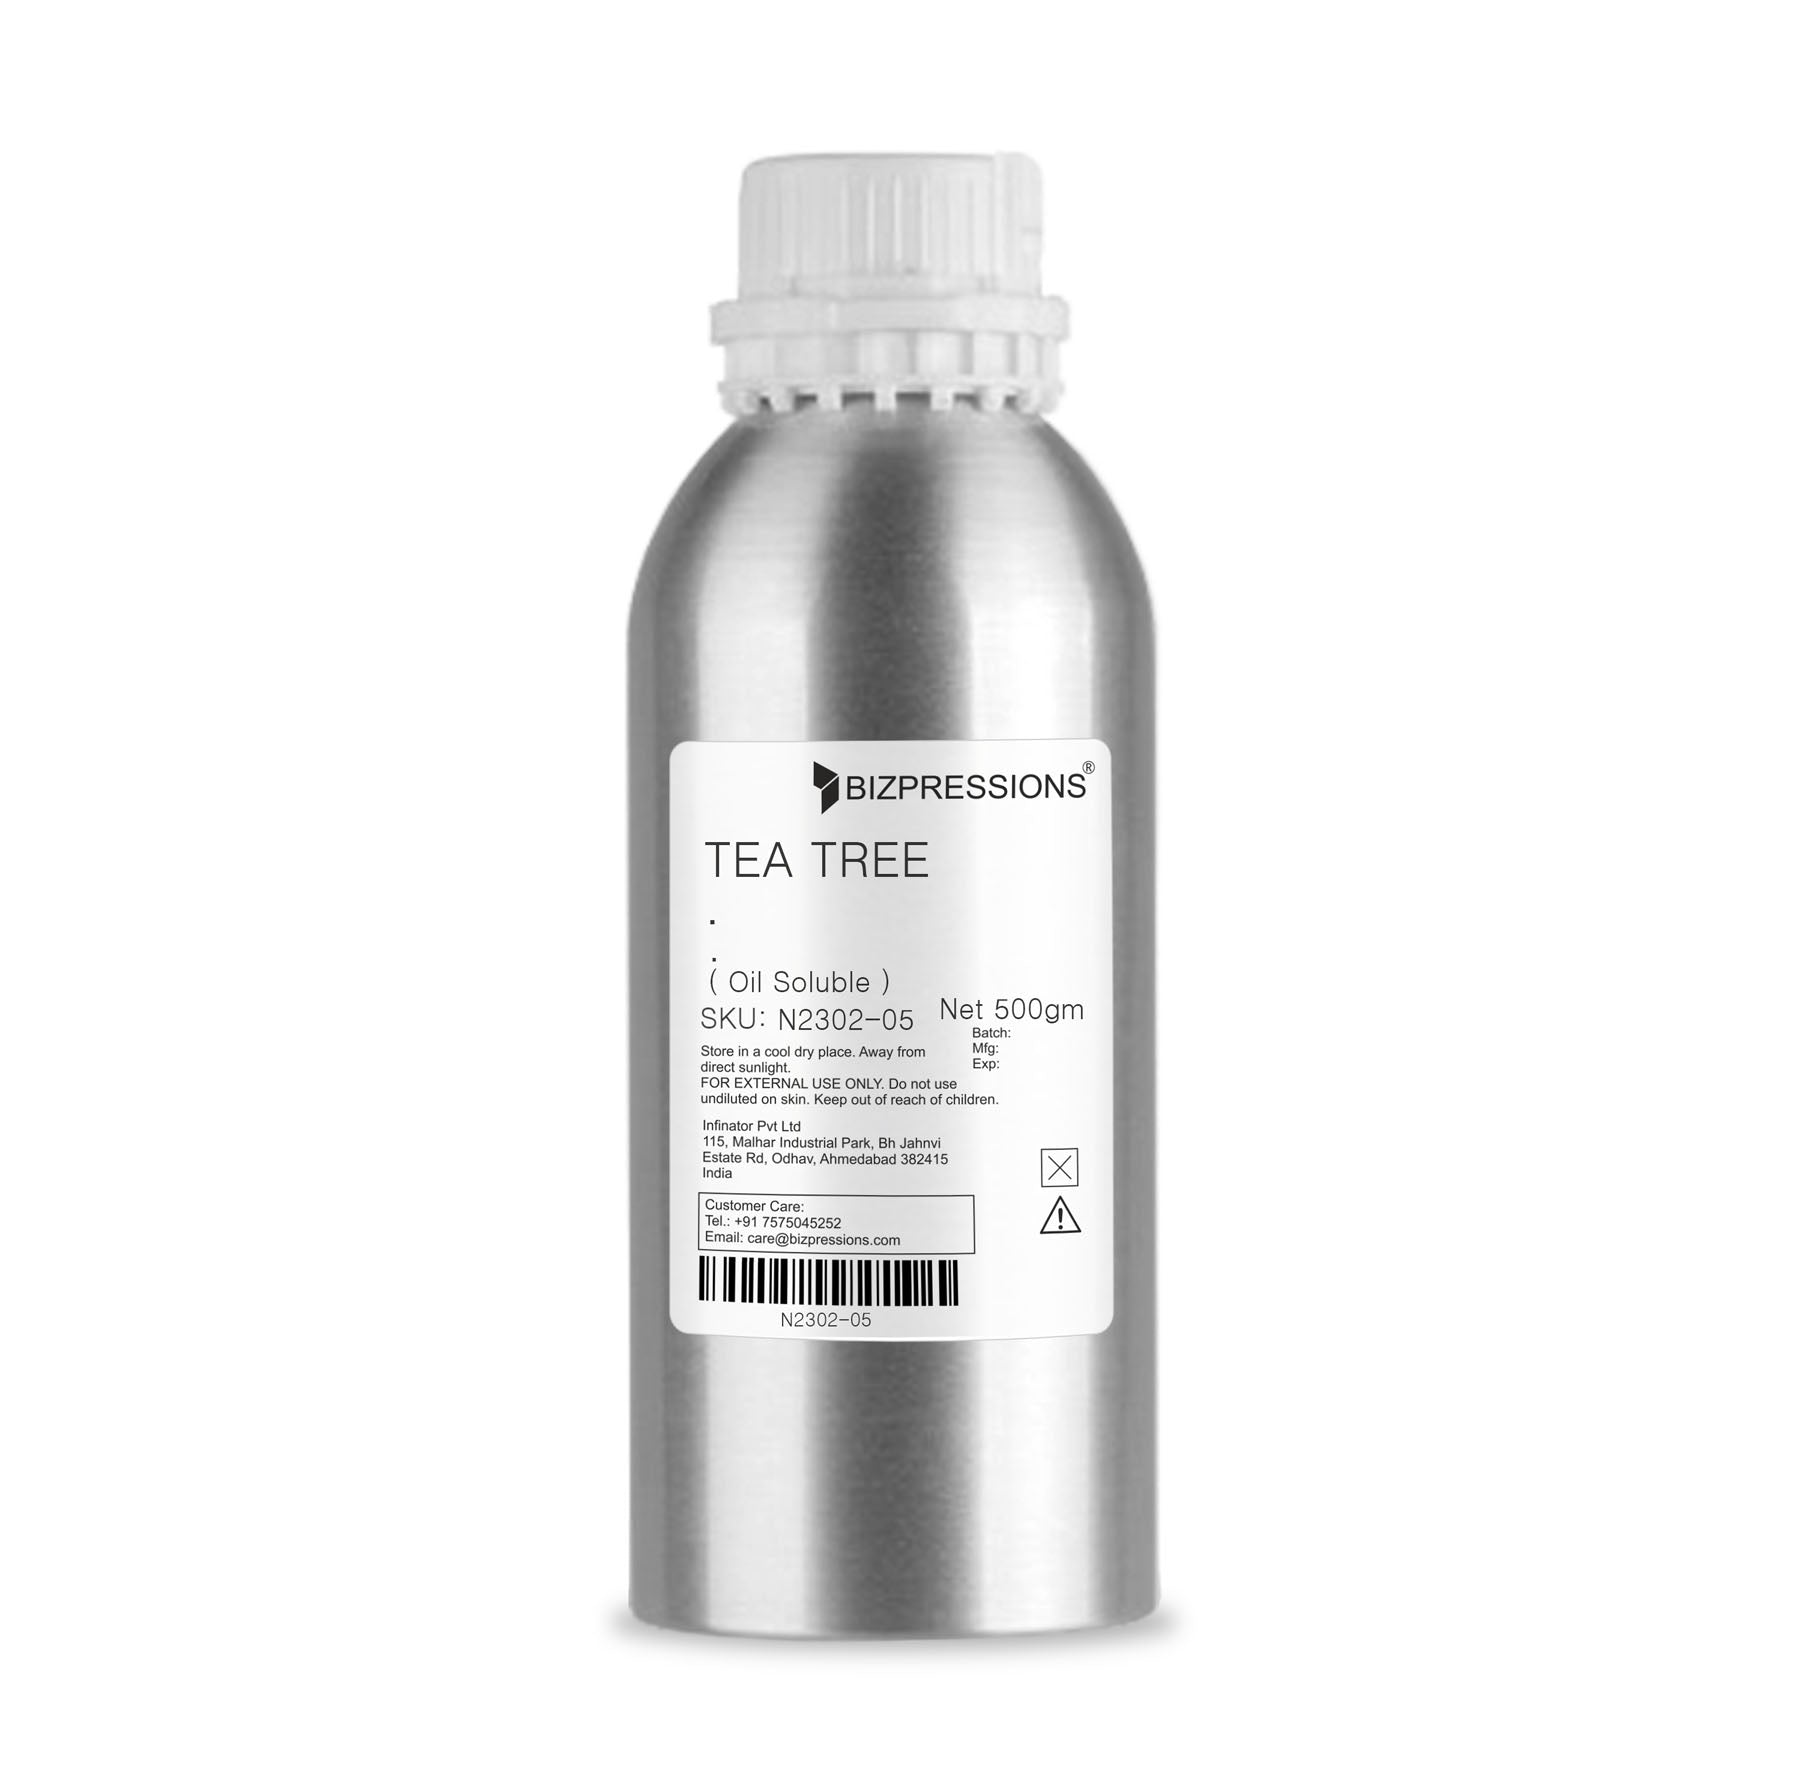 TEA TREE - Fragrance ( Oil Soluble ) - 500 gm